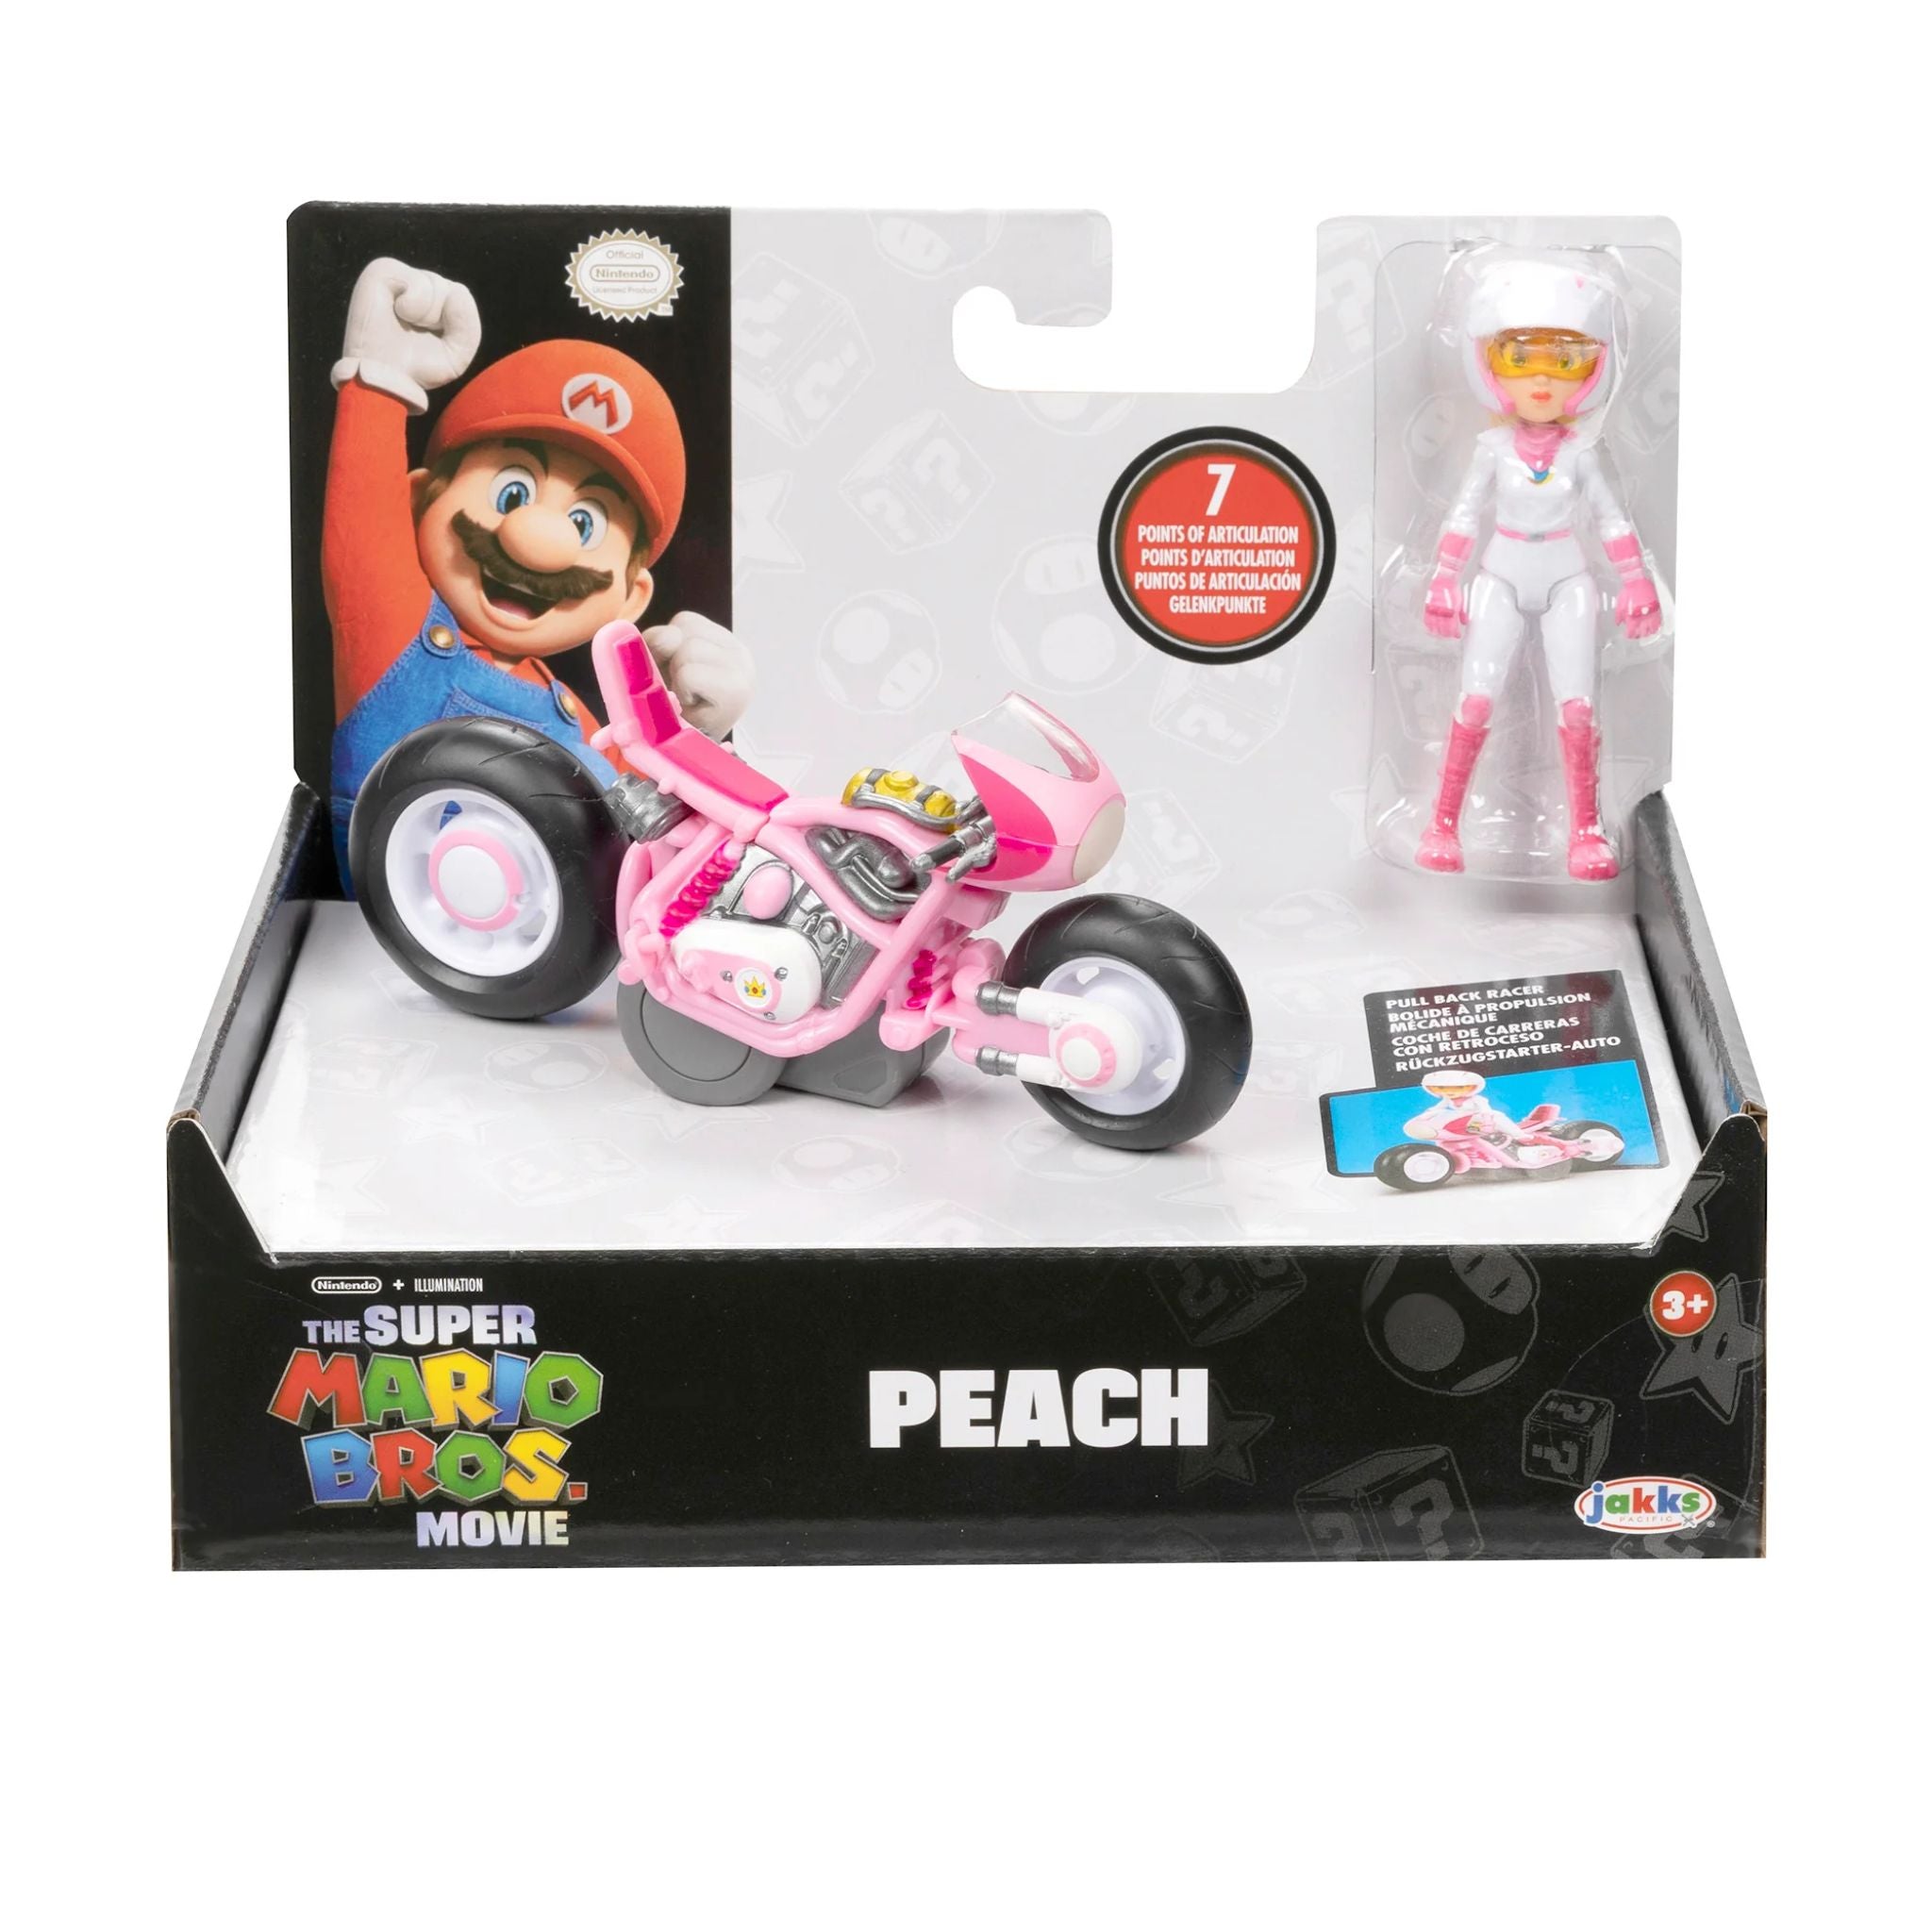 Super Mario Bros. Movie 2.5" Figure with Pull Back Racer - Peach (US-417214-P)